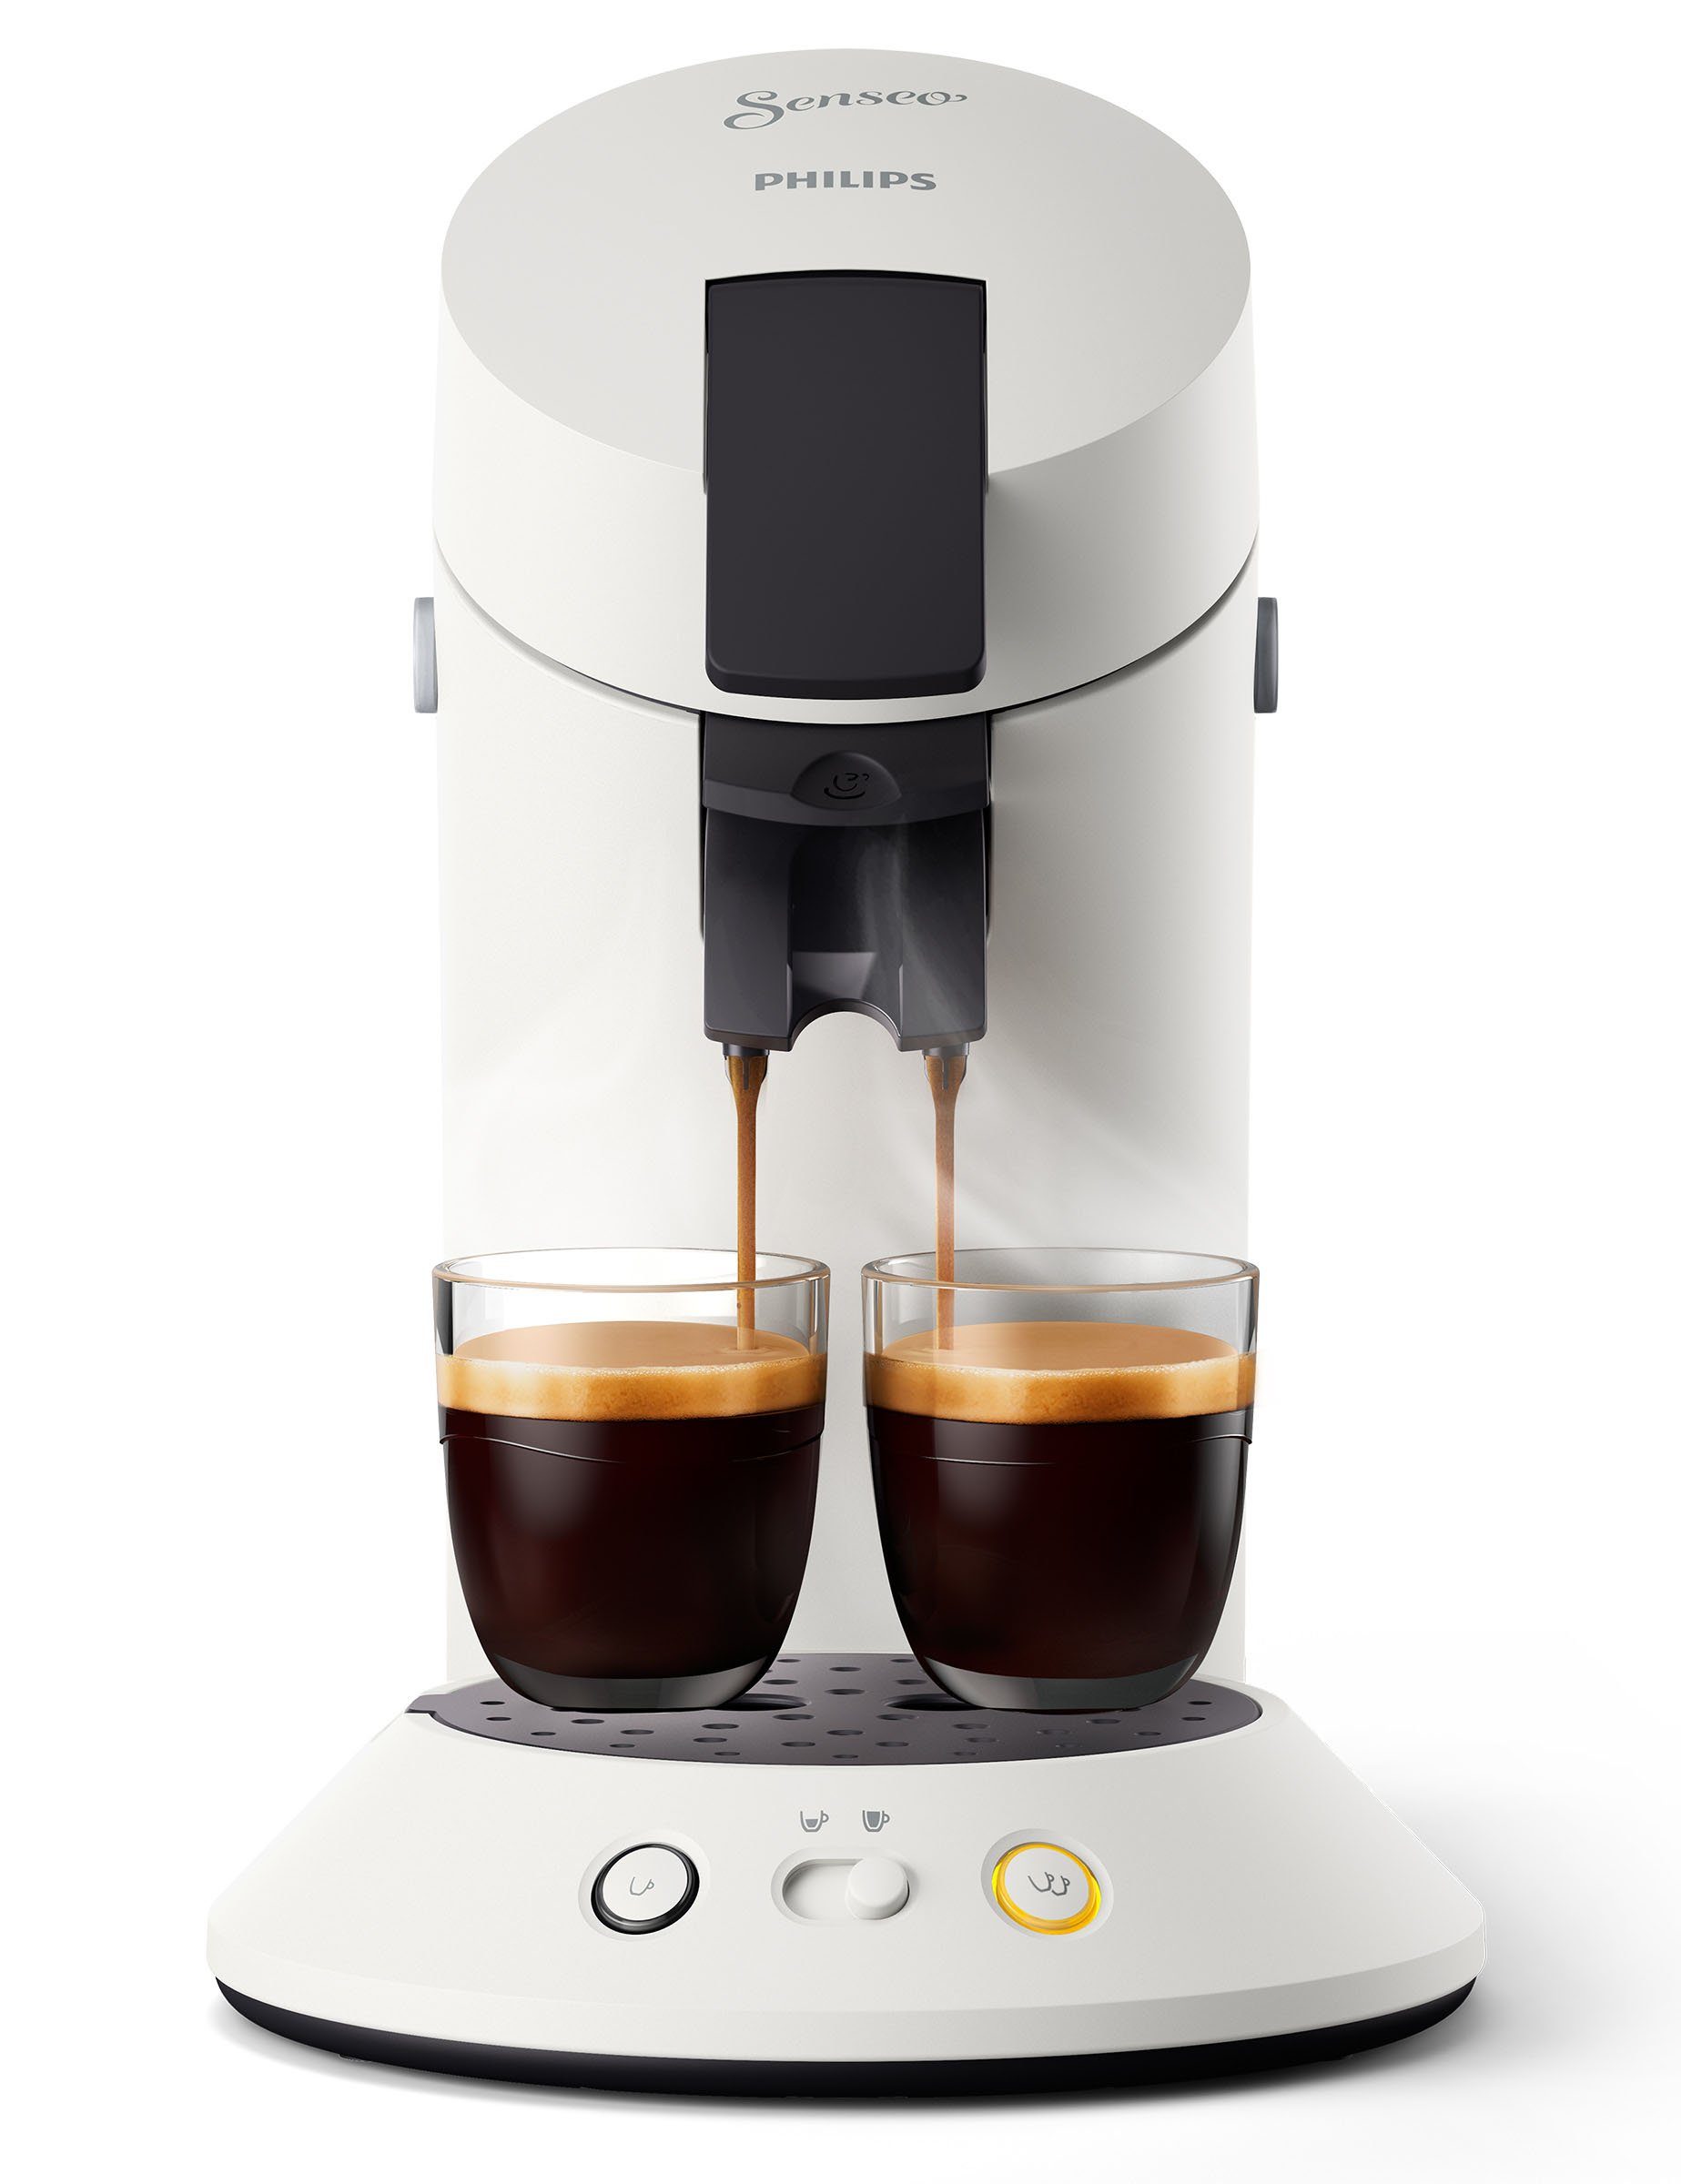 Plus +3 Philips CSA210/10, Kaffeepadmaschine Memo-Funktion, (Wert Gratis-Zugaben aus Senseo €5,-UVP) 80% recyceltem Original Plastik, Kaffeespezialitäten,